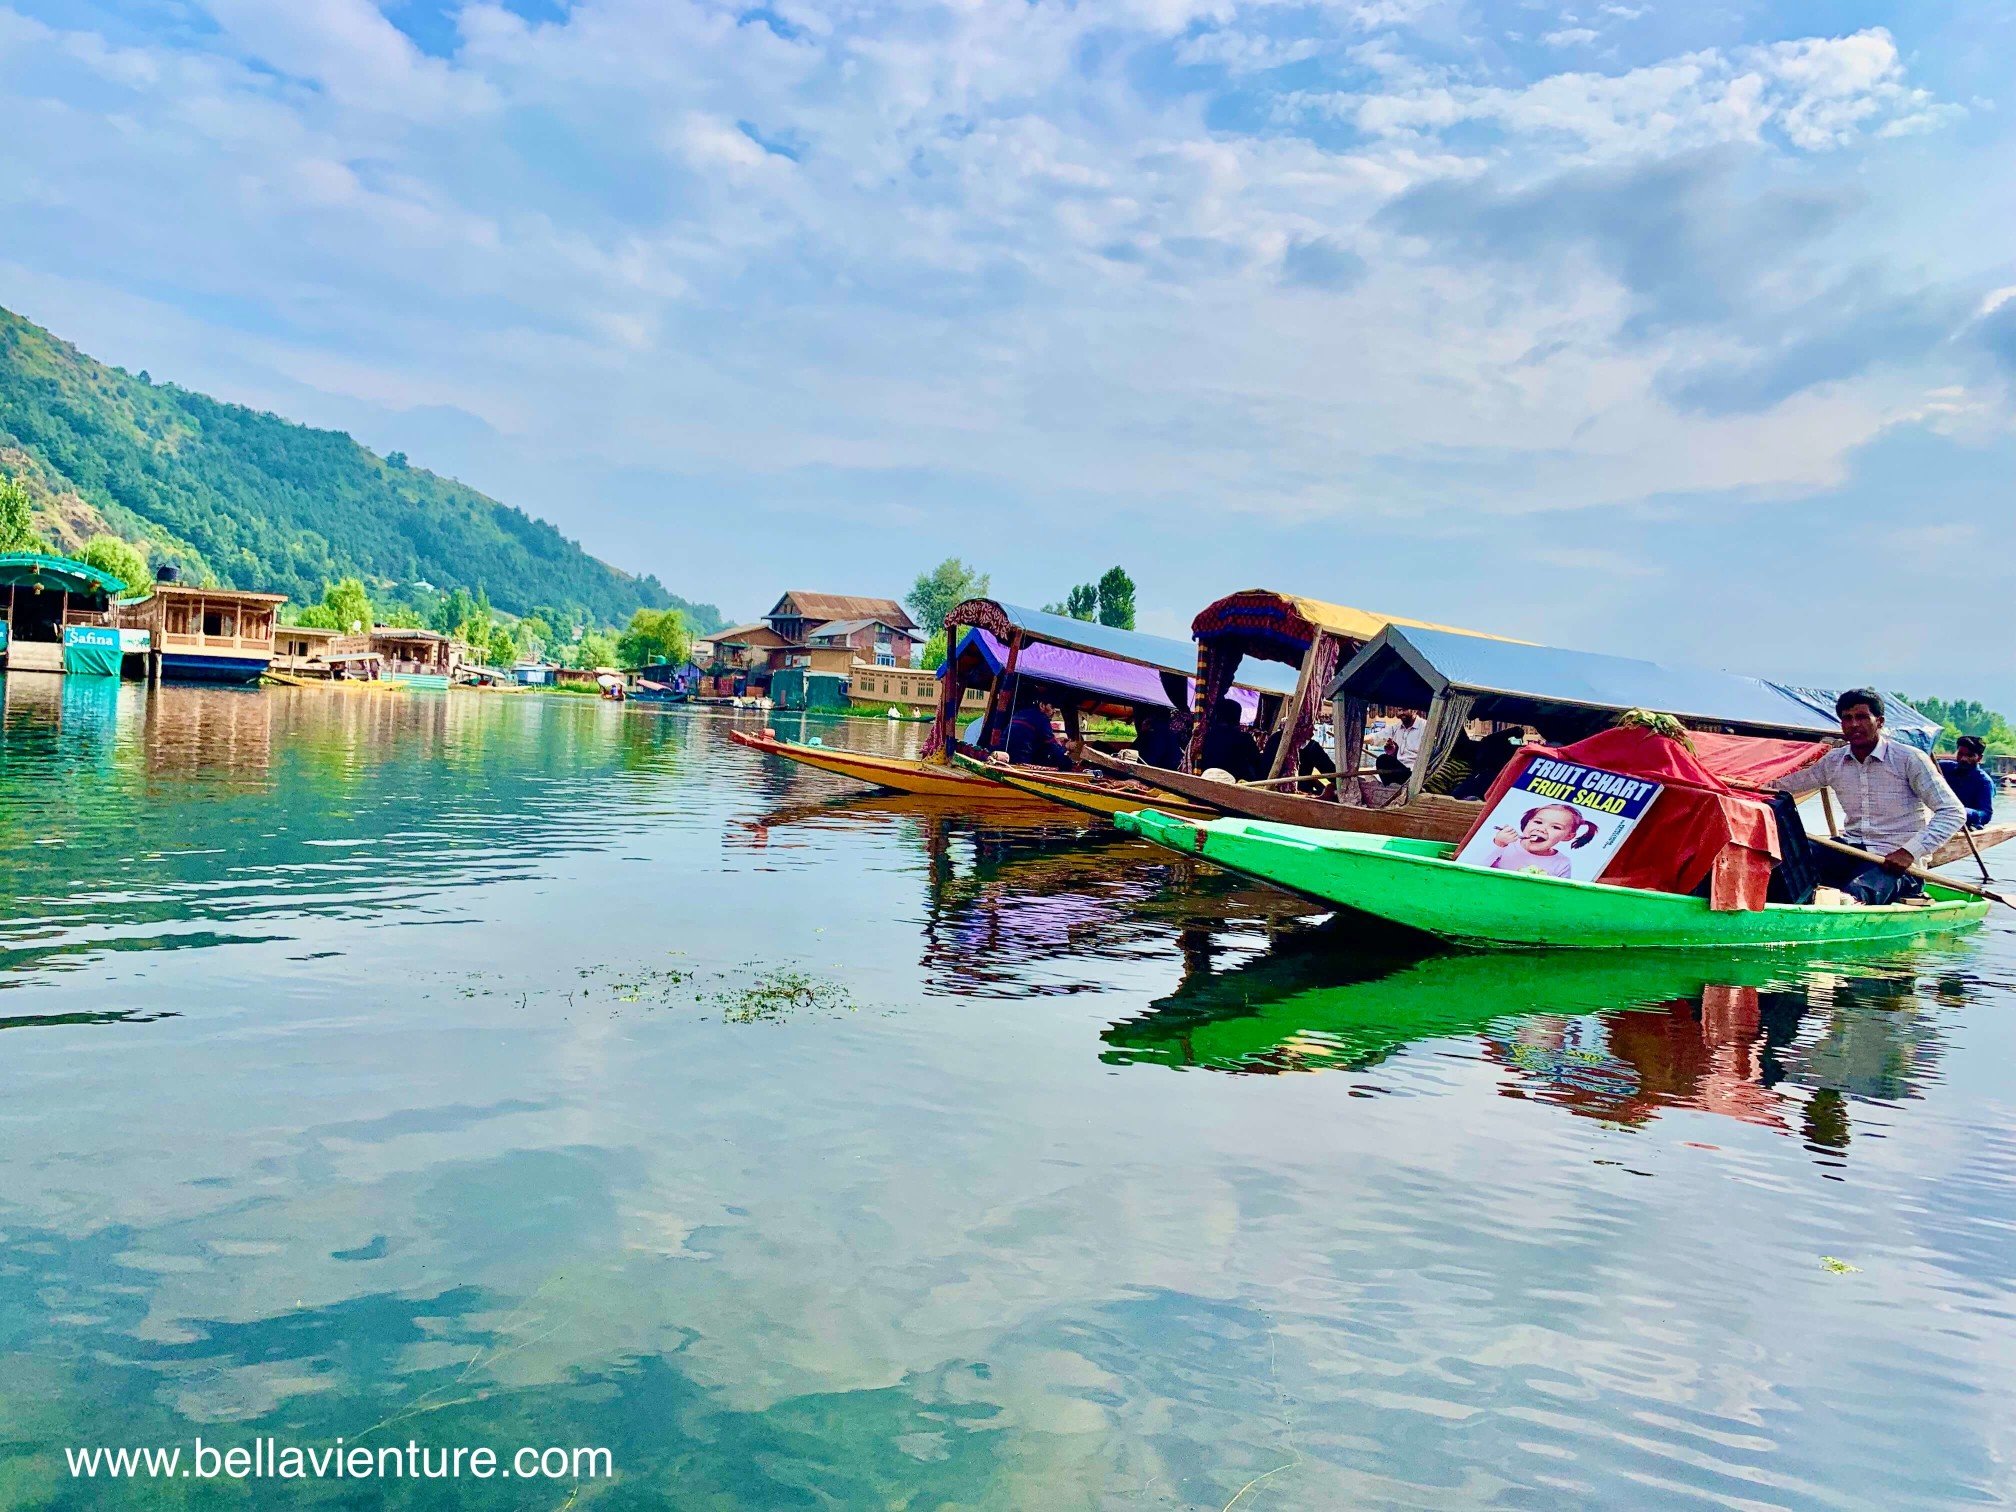 印度 India 北北印 north India 喀什米爾 Kashmir 斯里納加 Srinagar Dal lake 湖景 lakeside